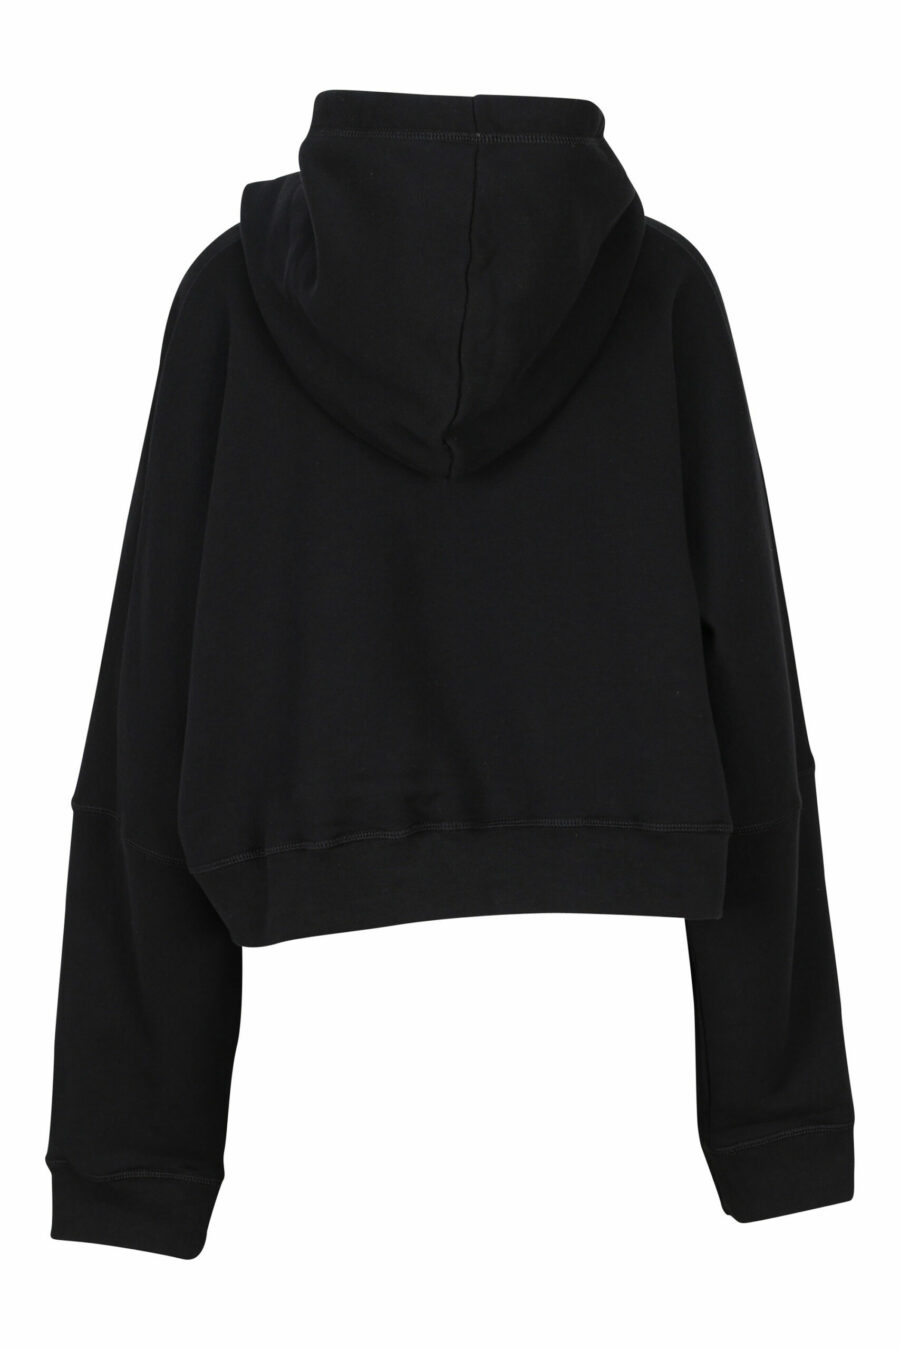 Black hooded sweatshirt with fuchsia maxilogo "darlin'" - 8054148144166 1 scaled